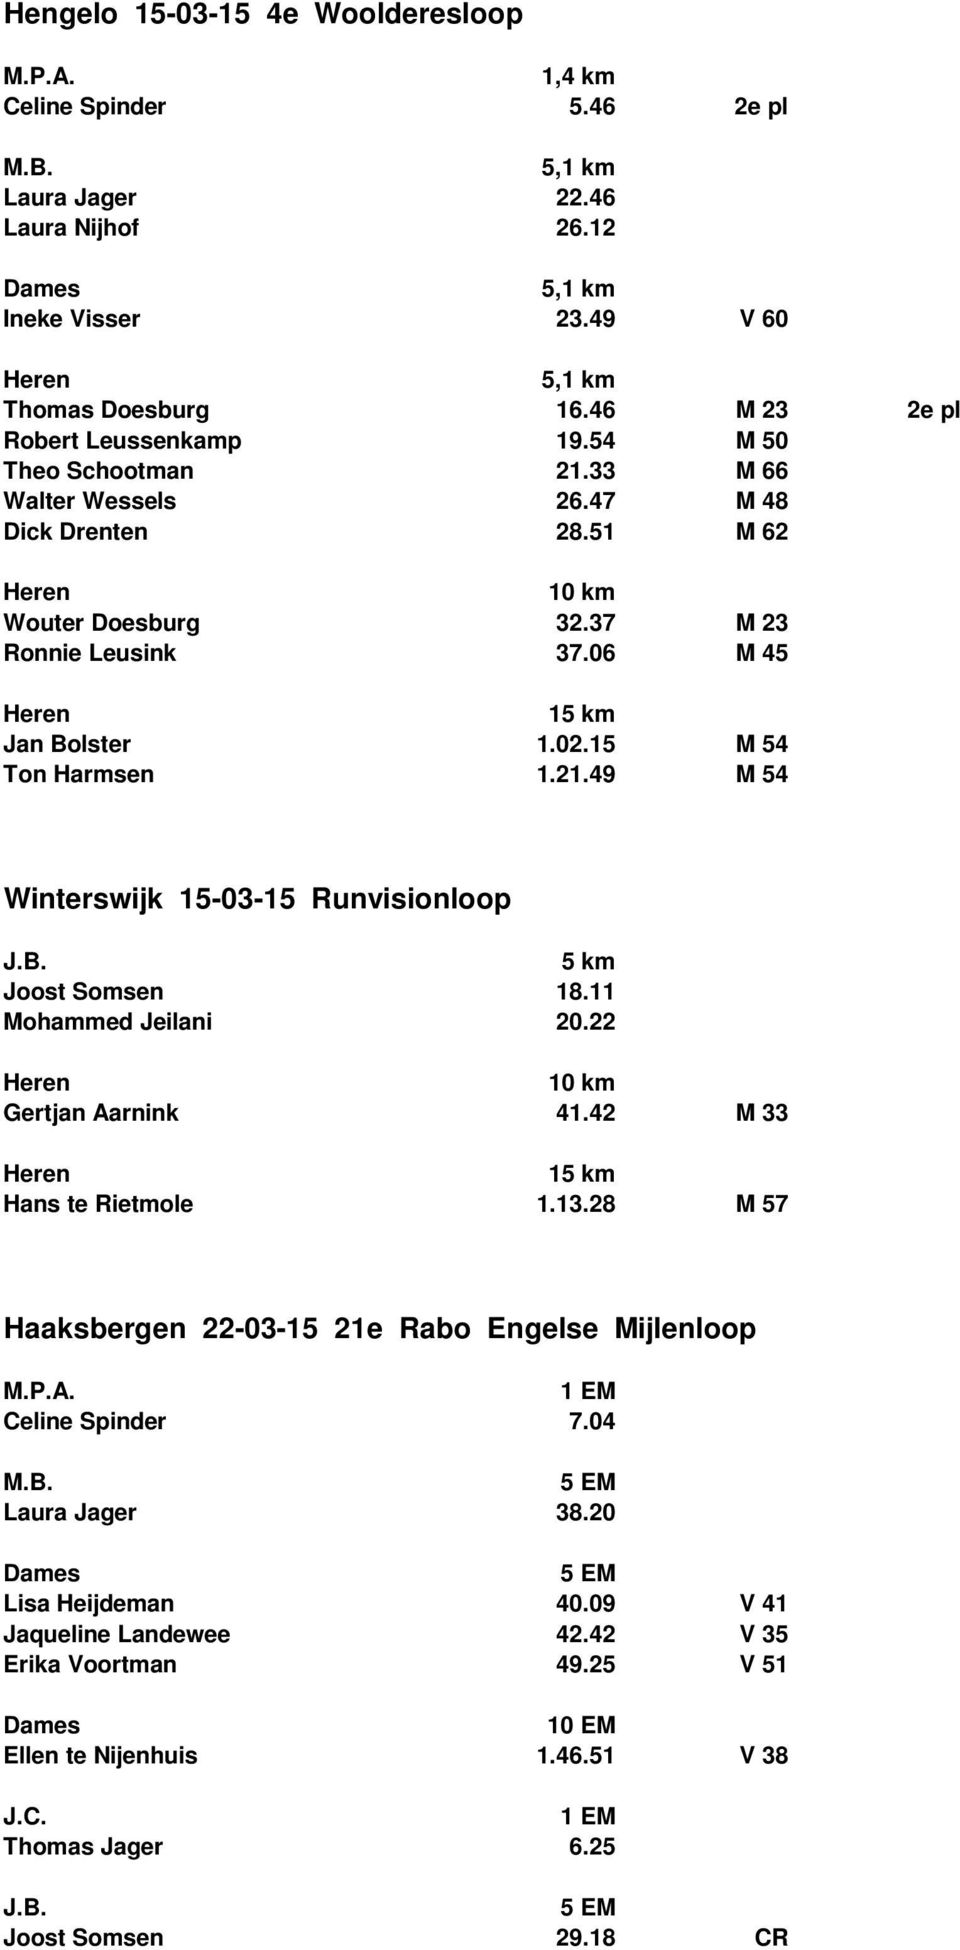 15 M 54 Ton Harmsen 1.21.49 M 54 Winterswijk 15-03-15 Runvisionloop Joost Somsen 18.11 Mohammed Jeilani 20.22 Gertjan Aarnink 41.42 M 33 1 Hans te Rietmole 1.13.